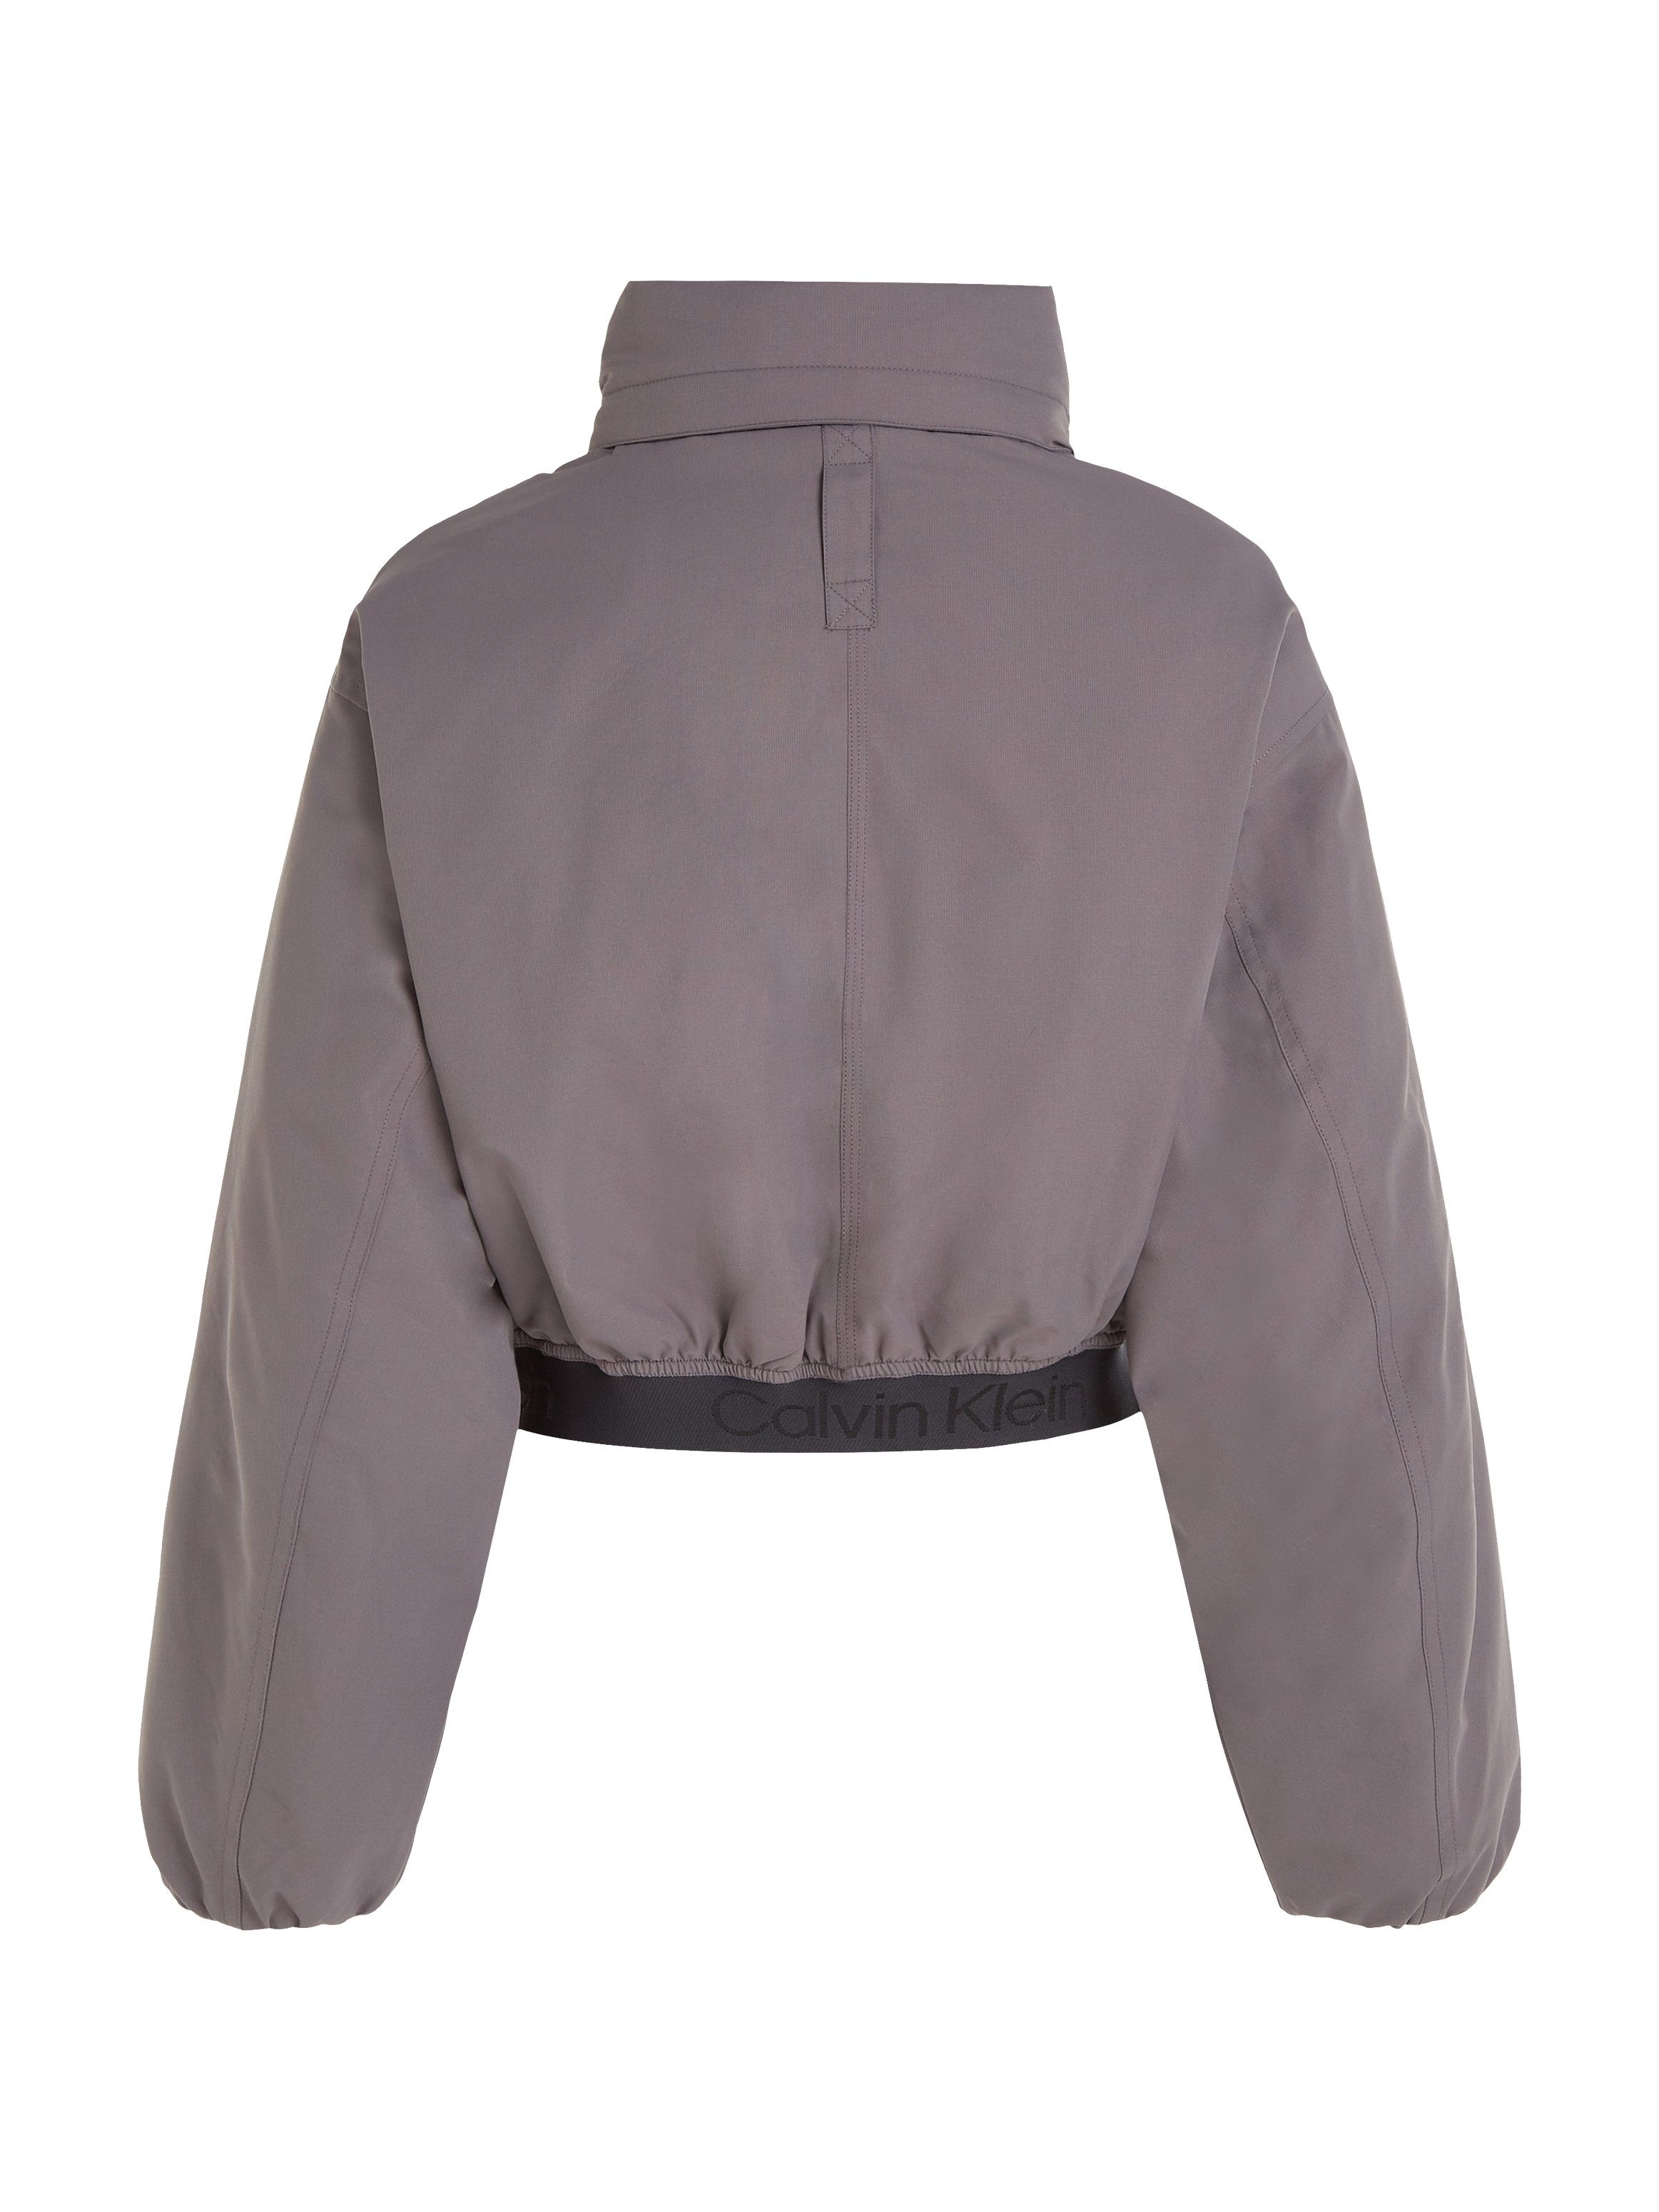 Calvin Klein Sport Outdoorjacke grau Padded PW - Jacket